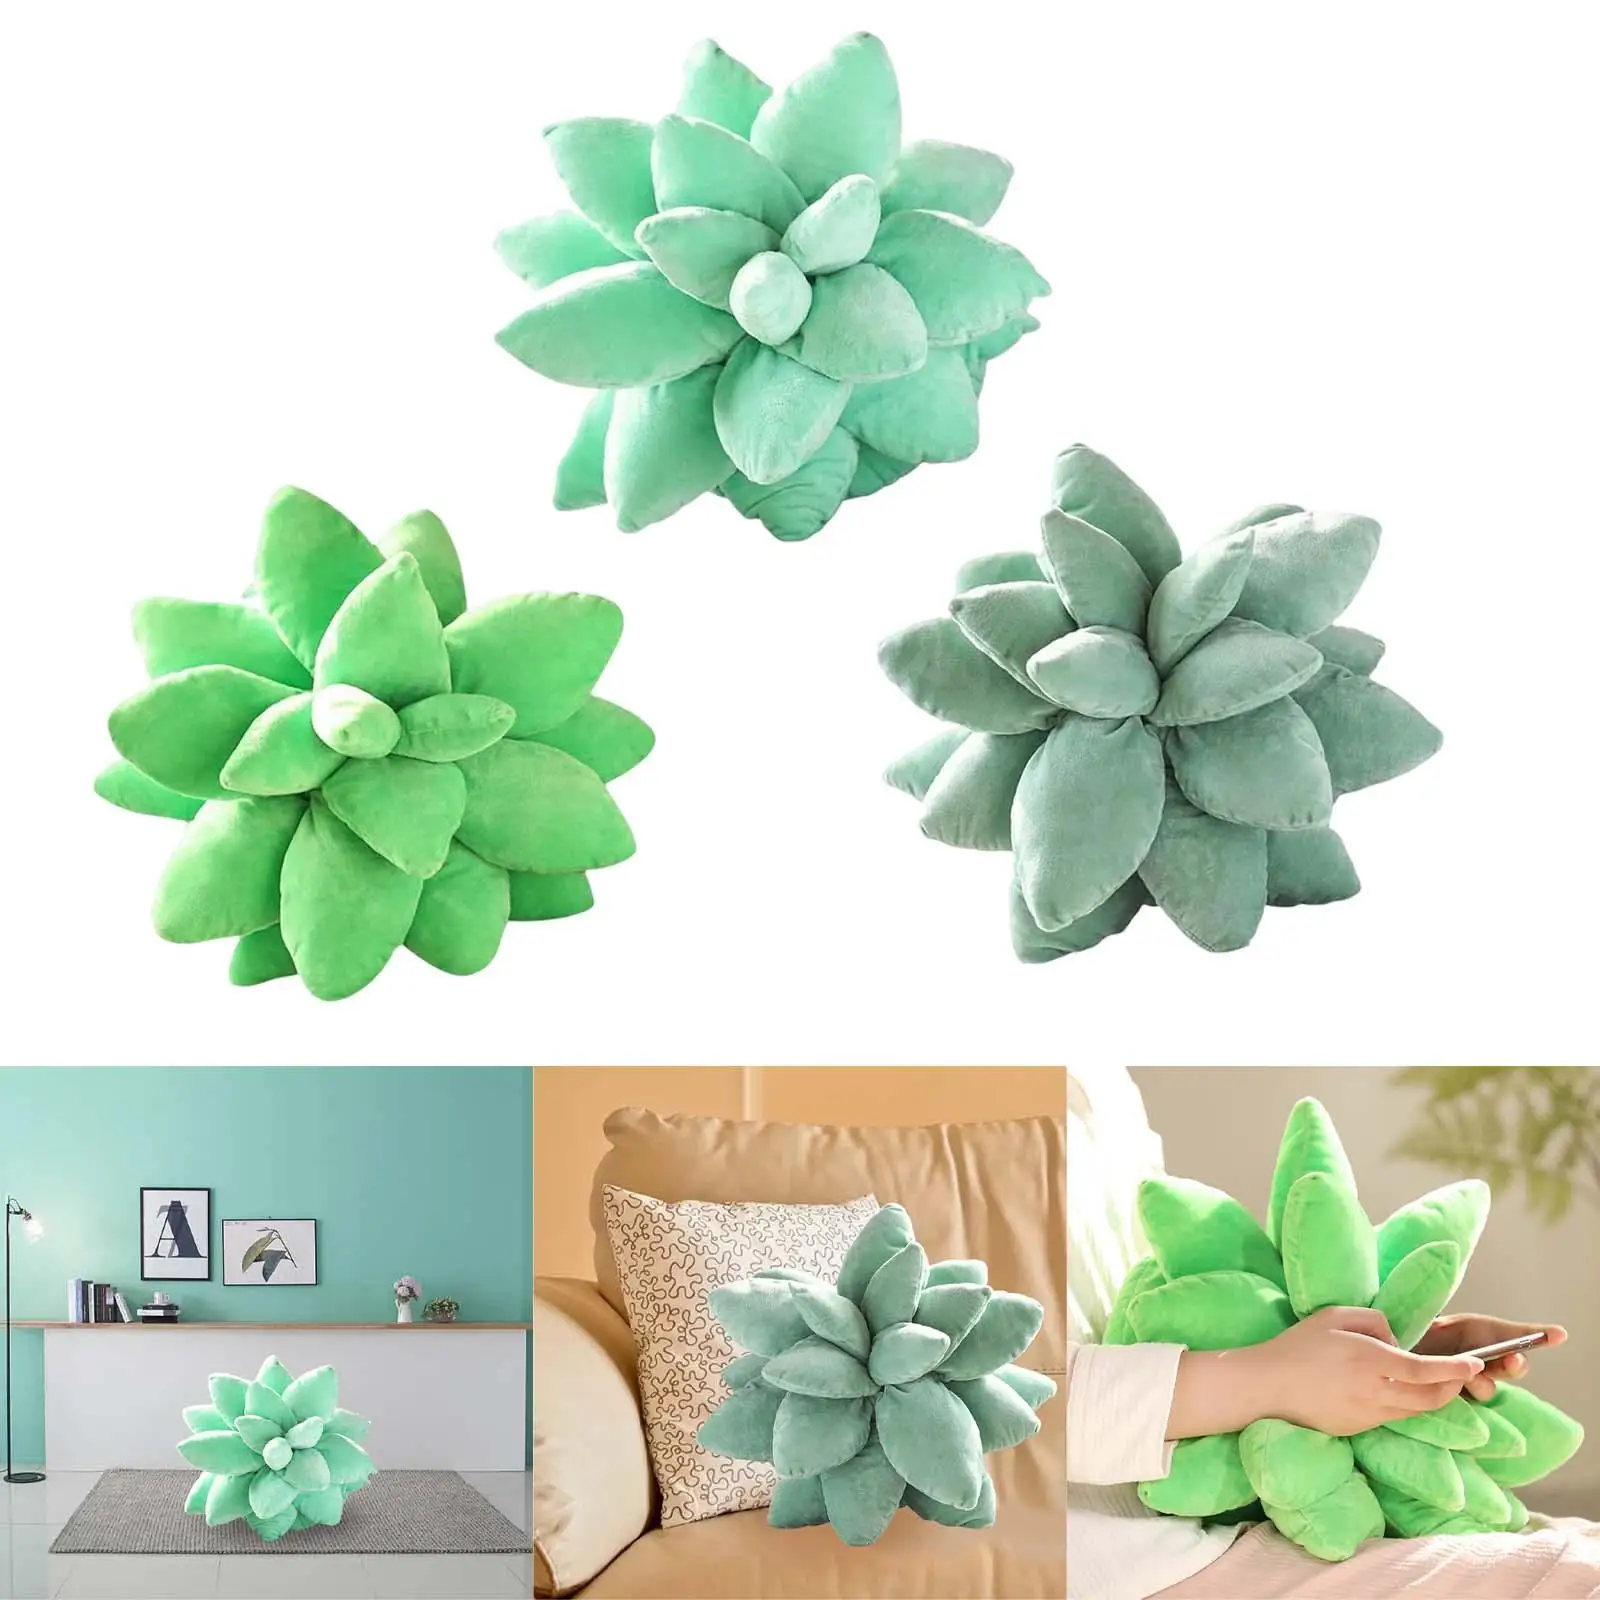 3 Pieces Plush Succulents Throw Pillow Plant Sofa Couch  Home Decor Ornament